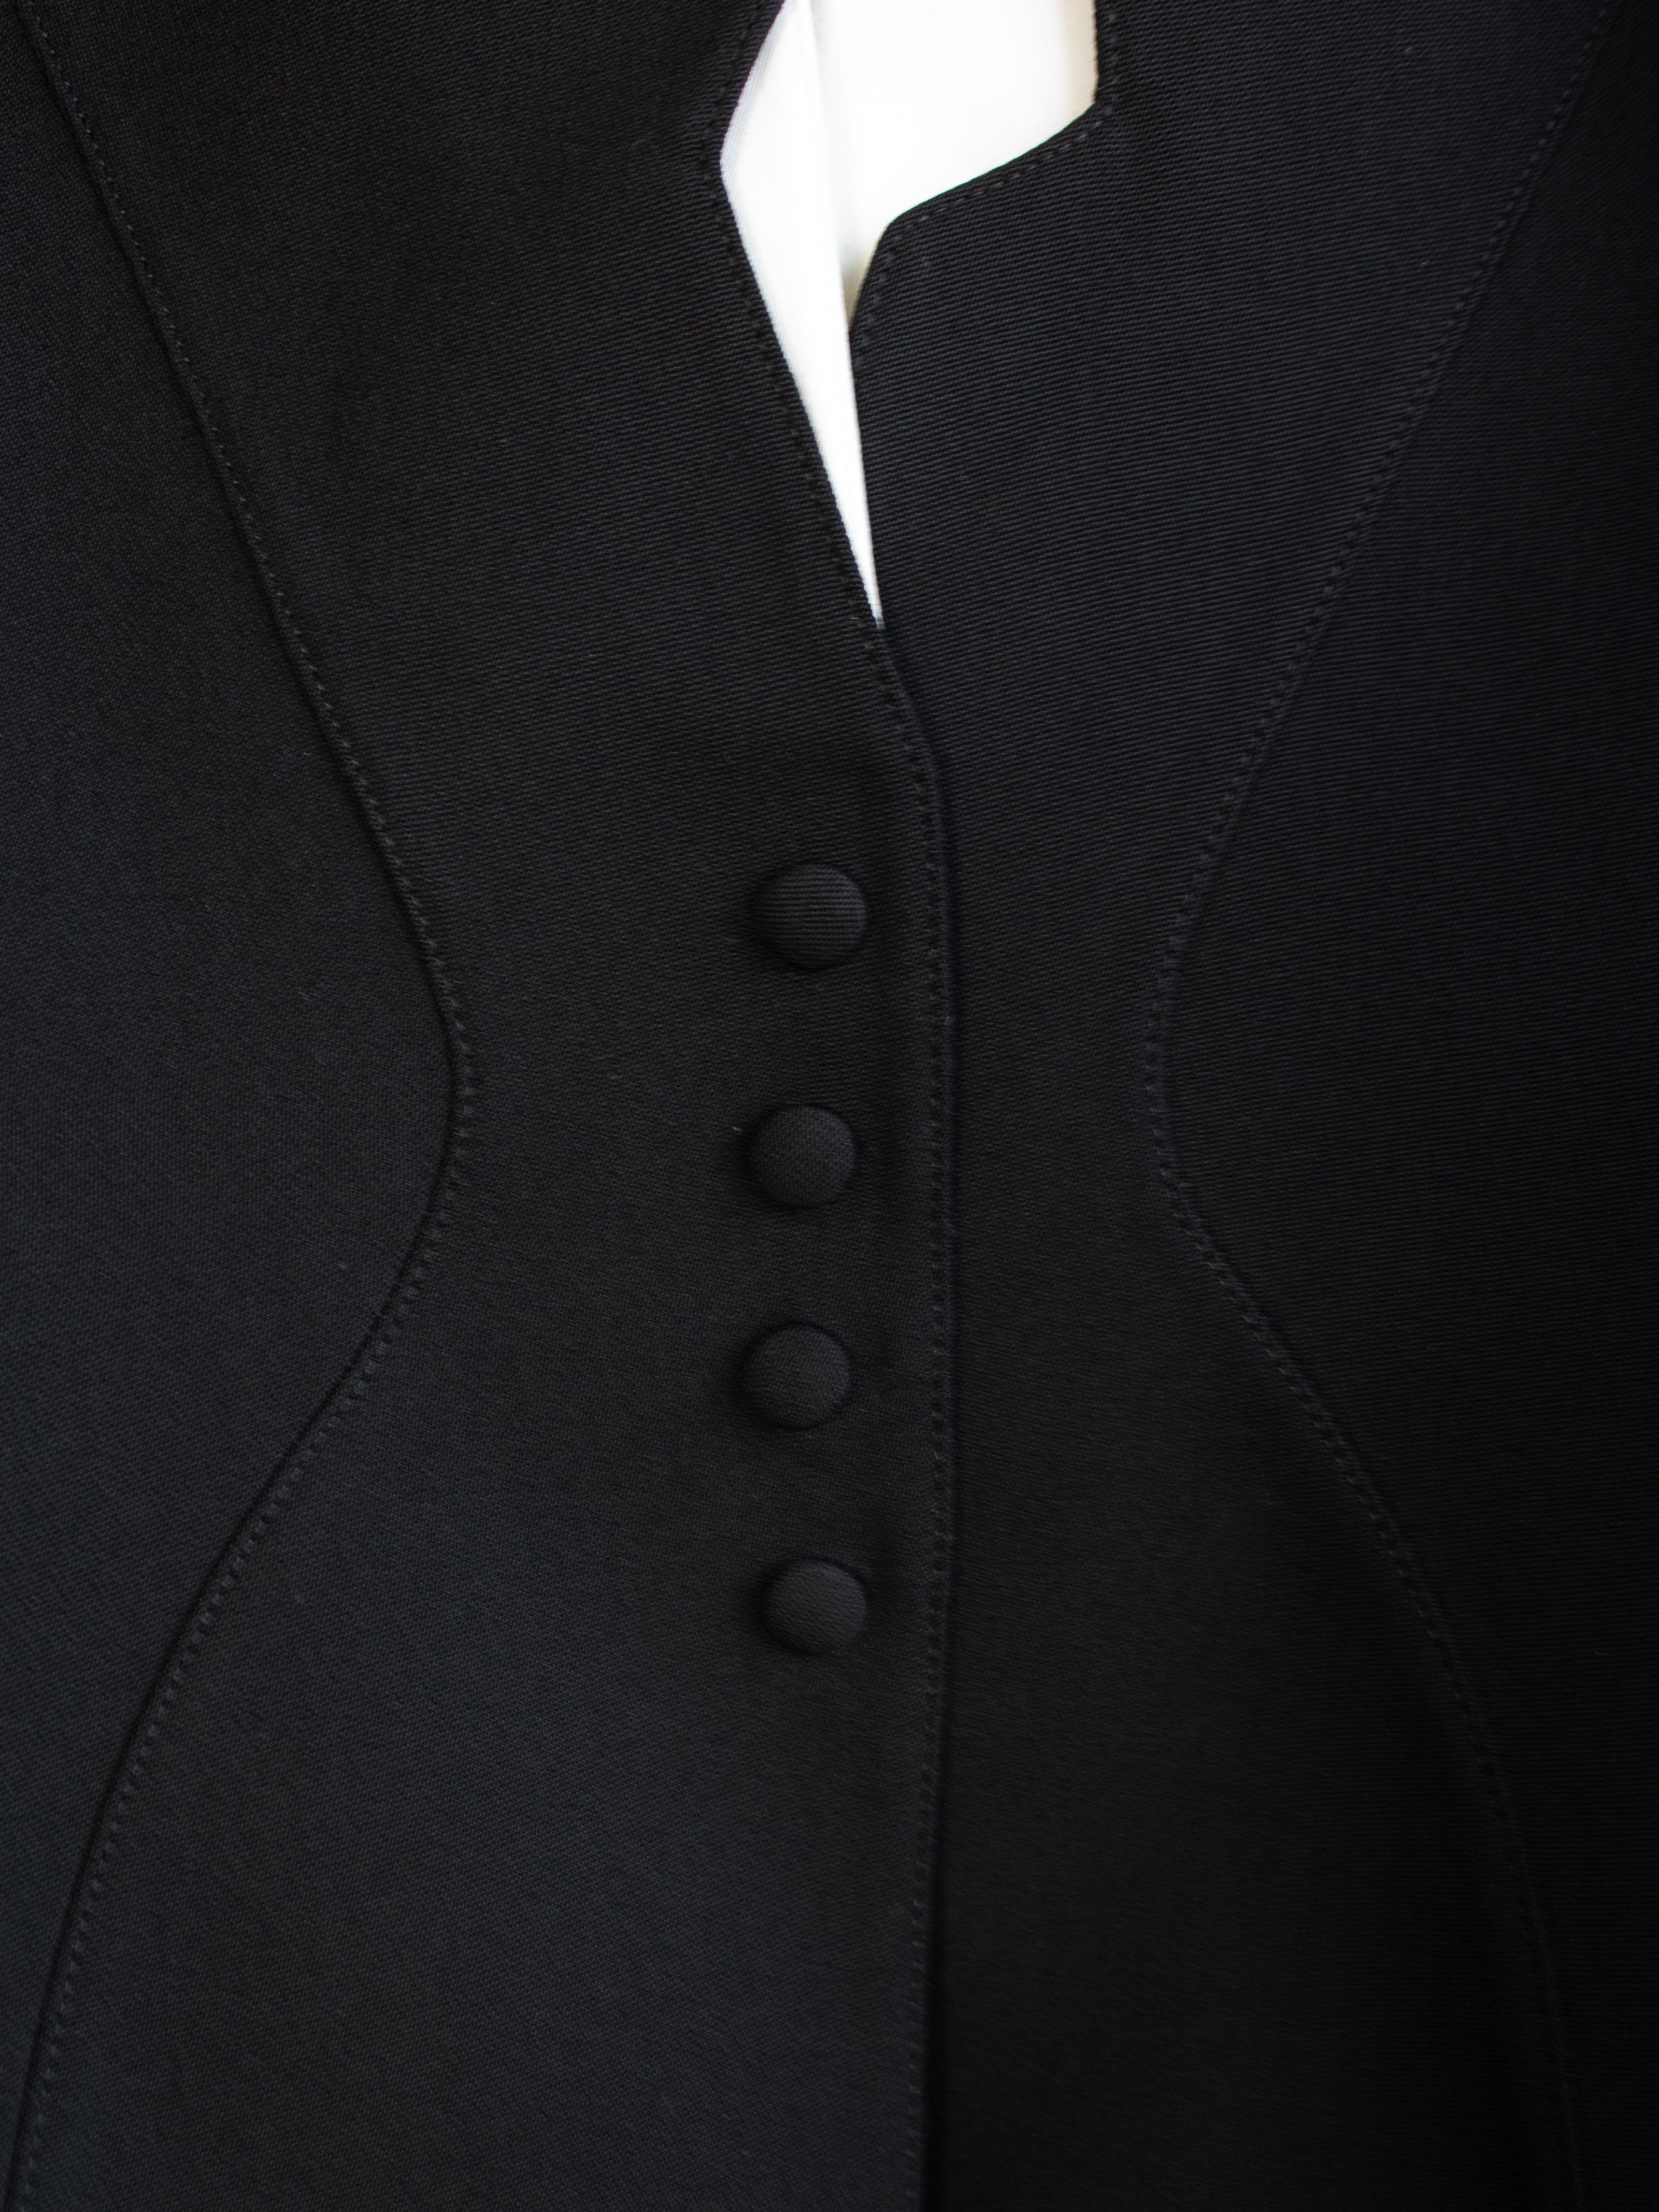 Icone Thierry Mugler Vintage S/S 1994 Black White Zigzag Sculptural Jacket en vente 7